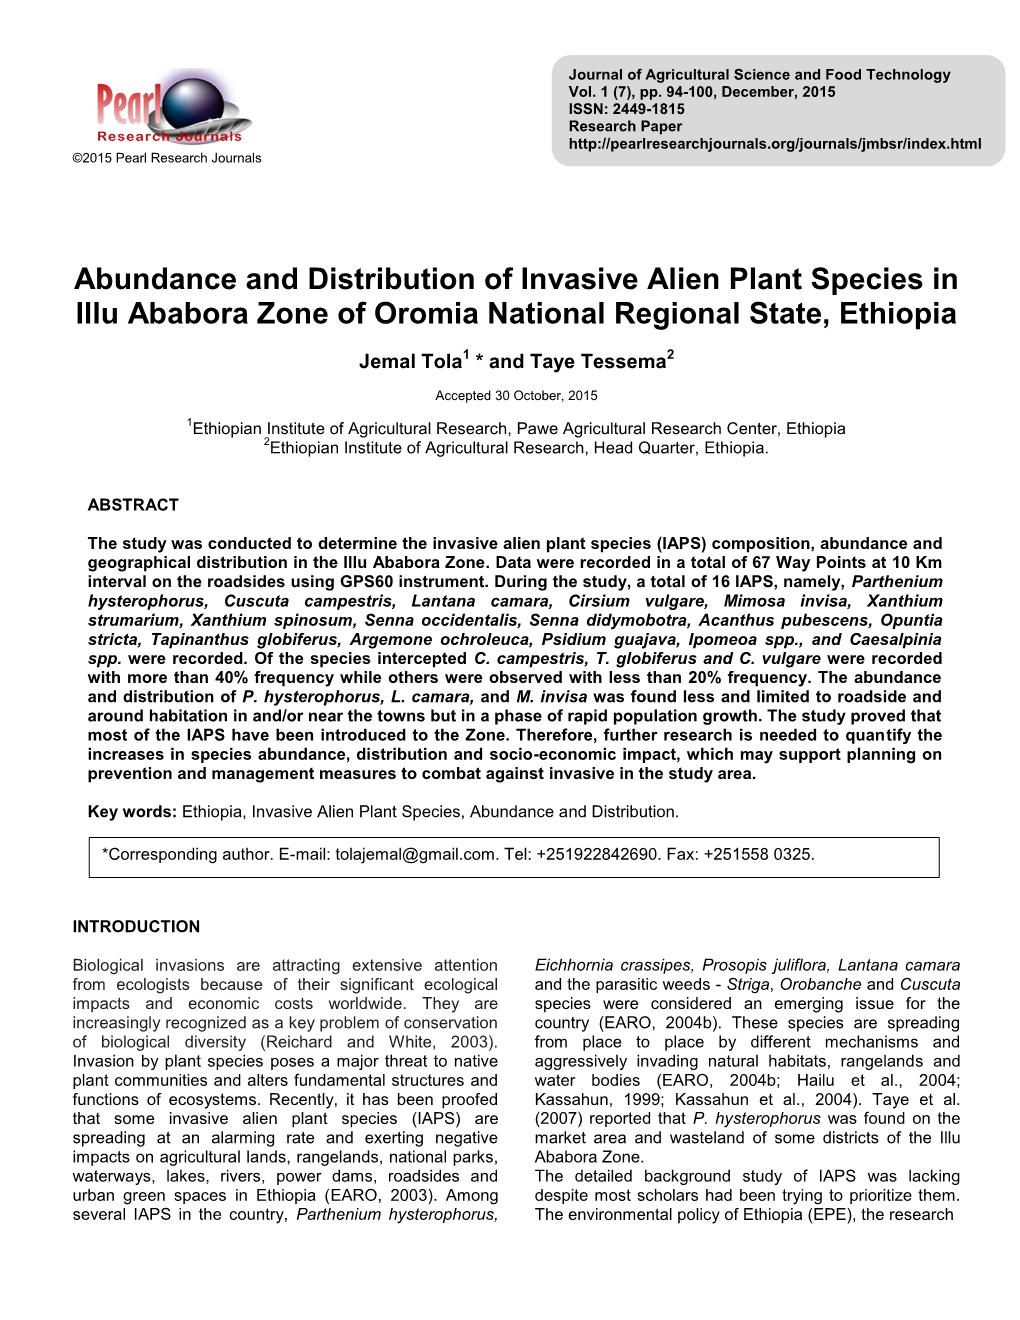 Abundance and Distribution of Invasive Alien Plant Species in Illu Ababora Zone of Oromia National Regional State, Ethiopia